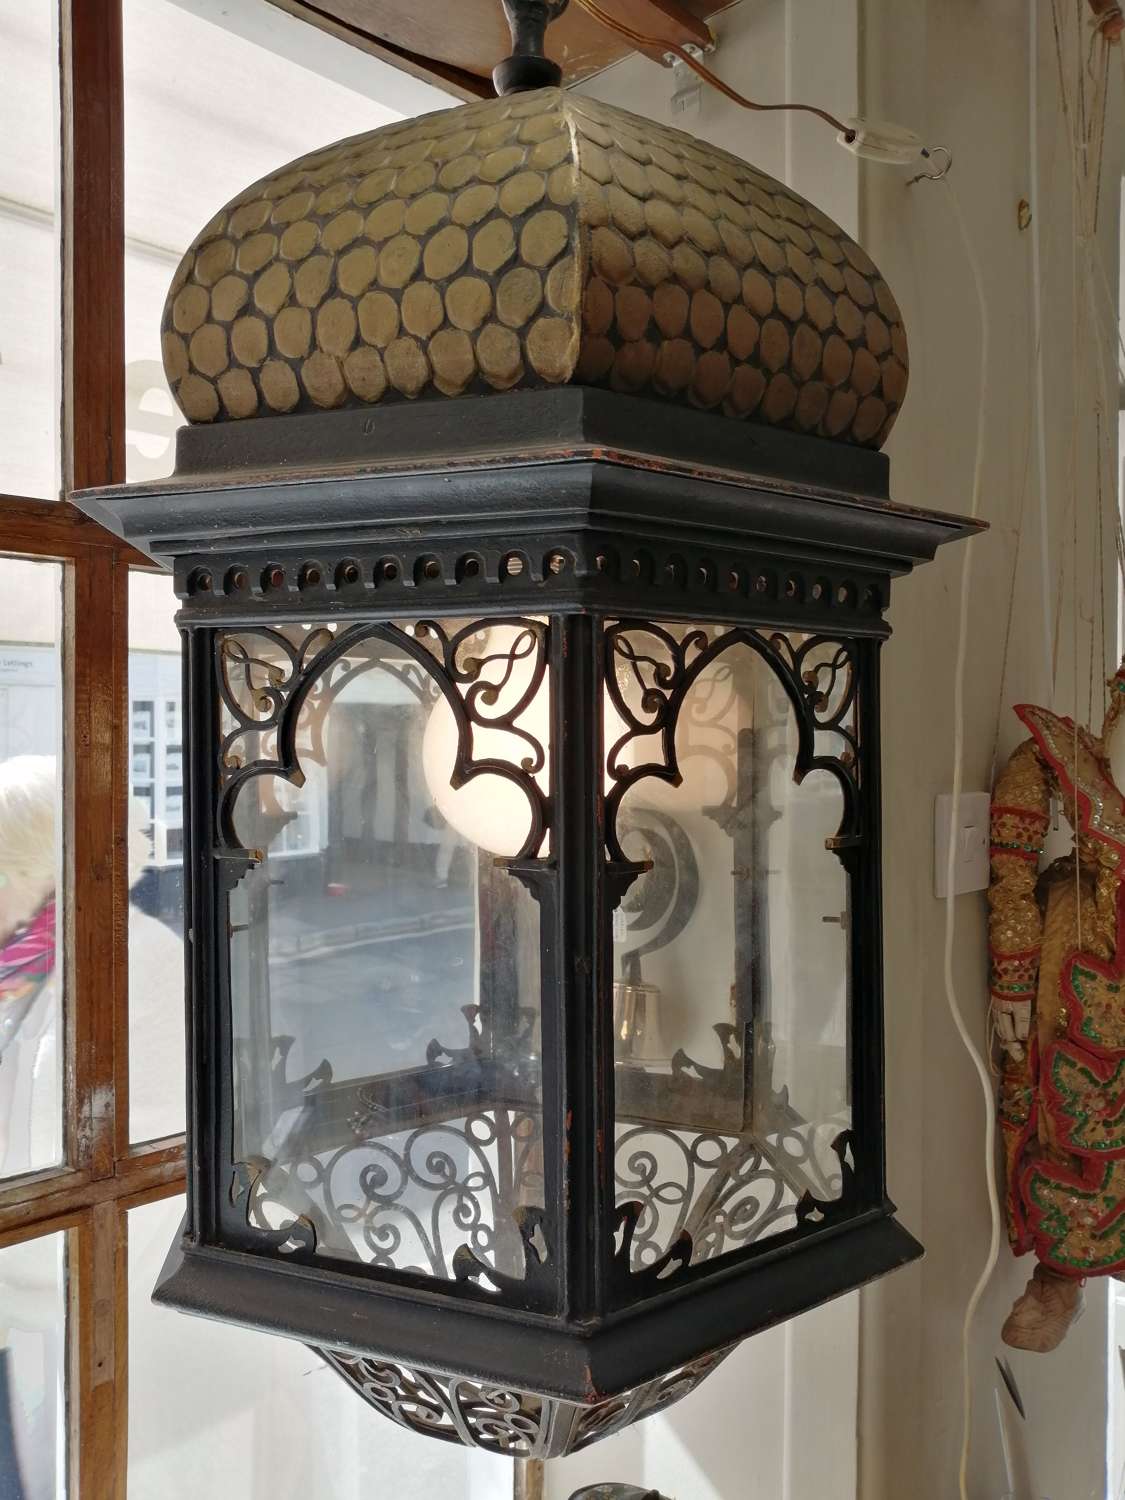 A 19th century cast iron lantern of Moorish influence